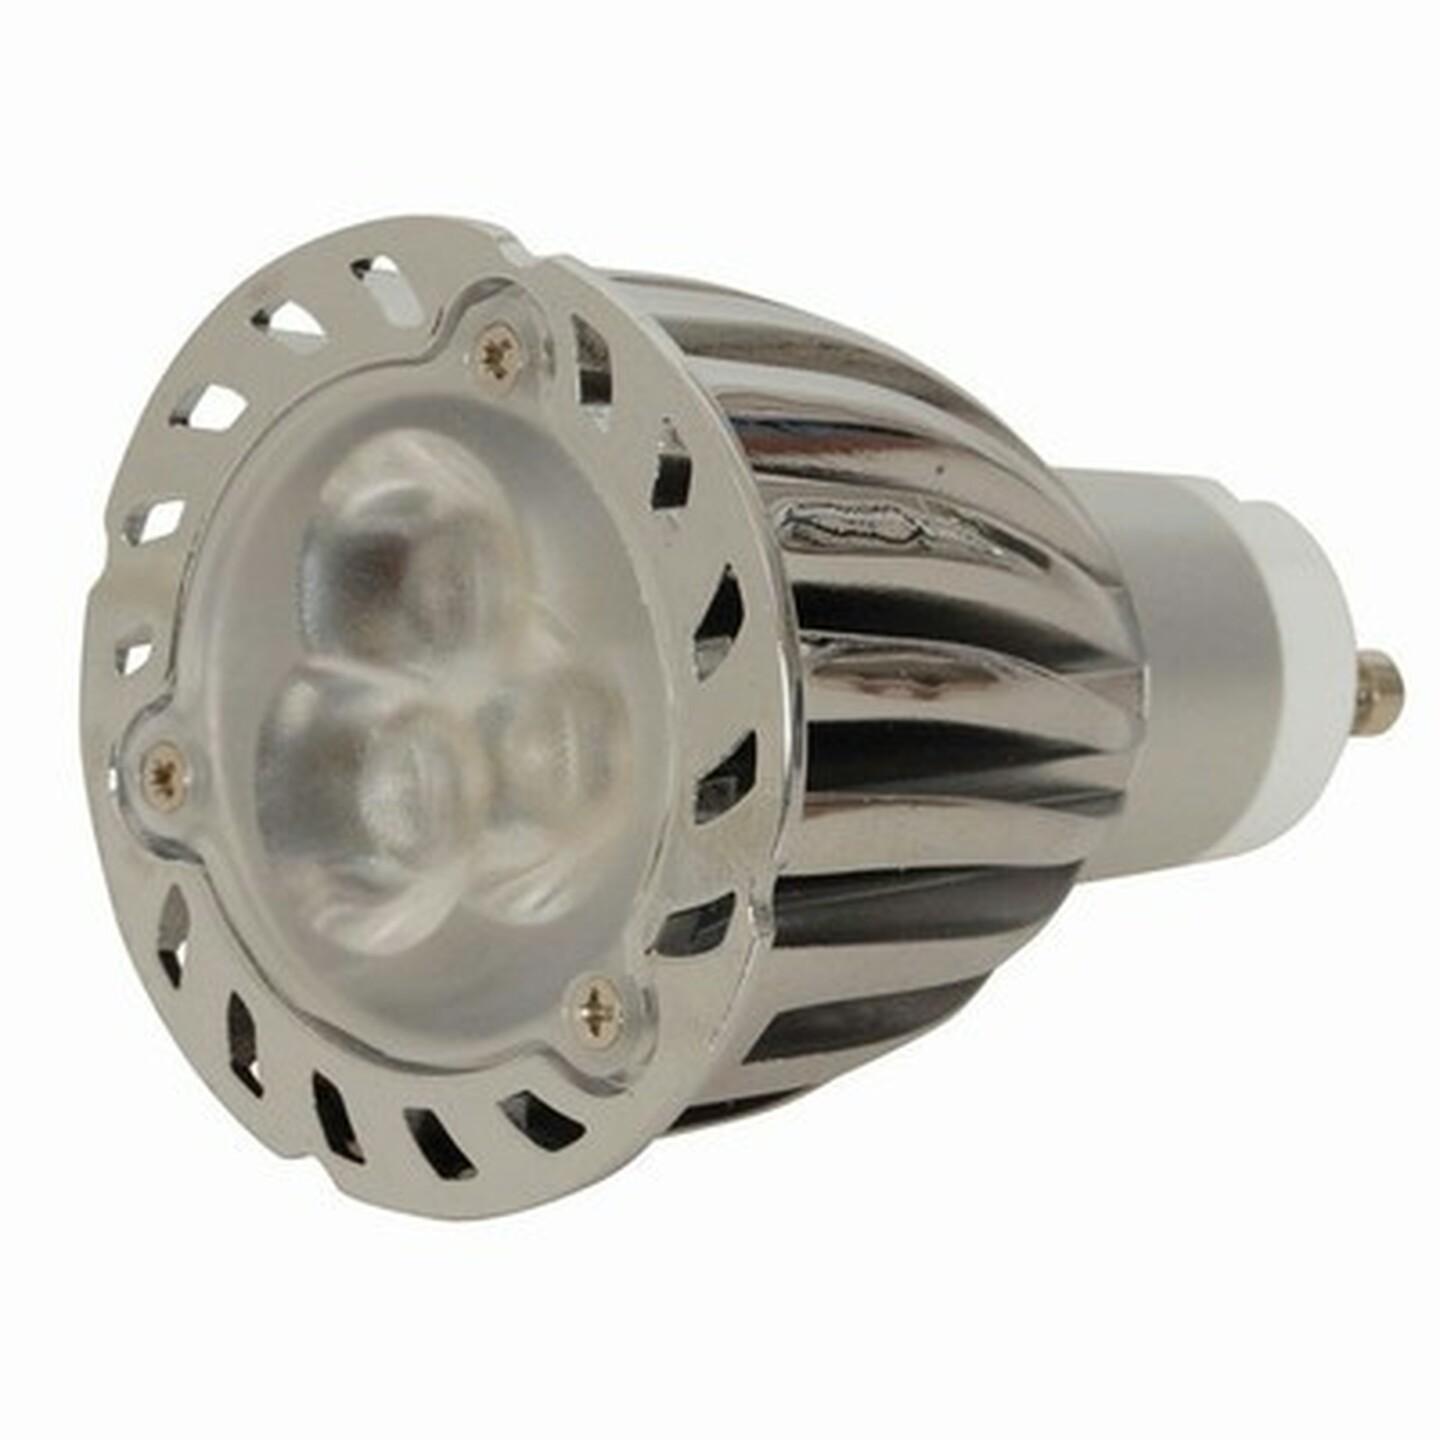 GU10 LED Lamp 3 x 2W CREE Warm White